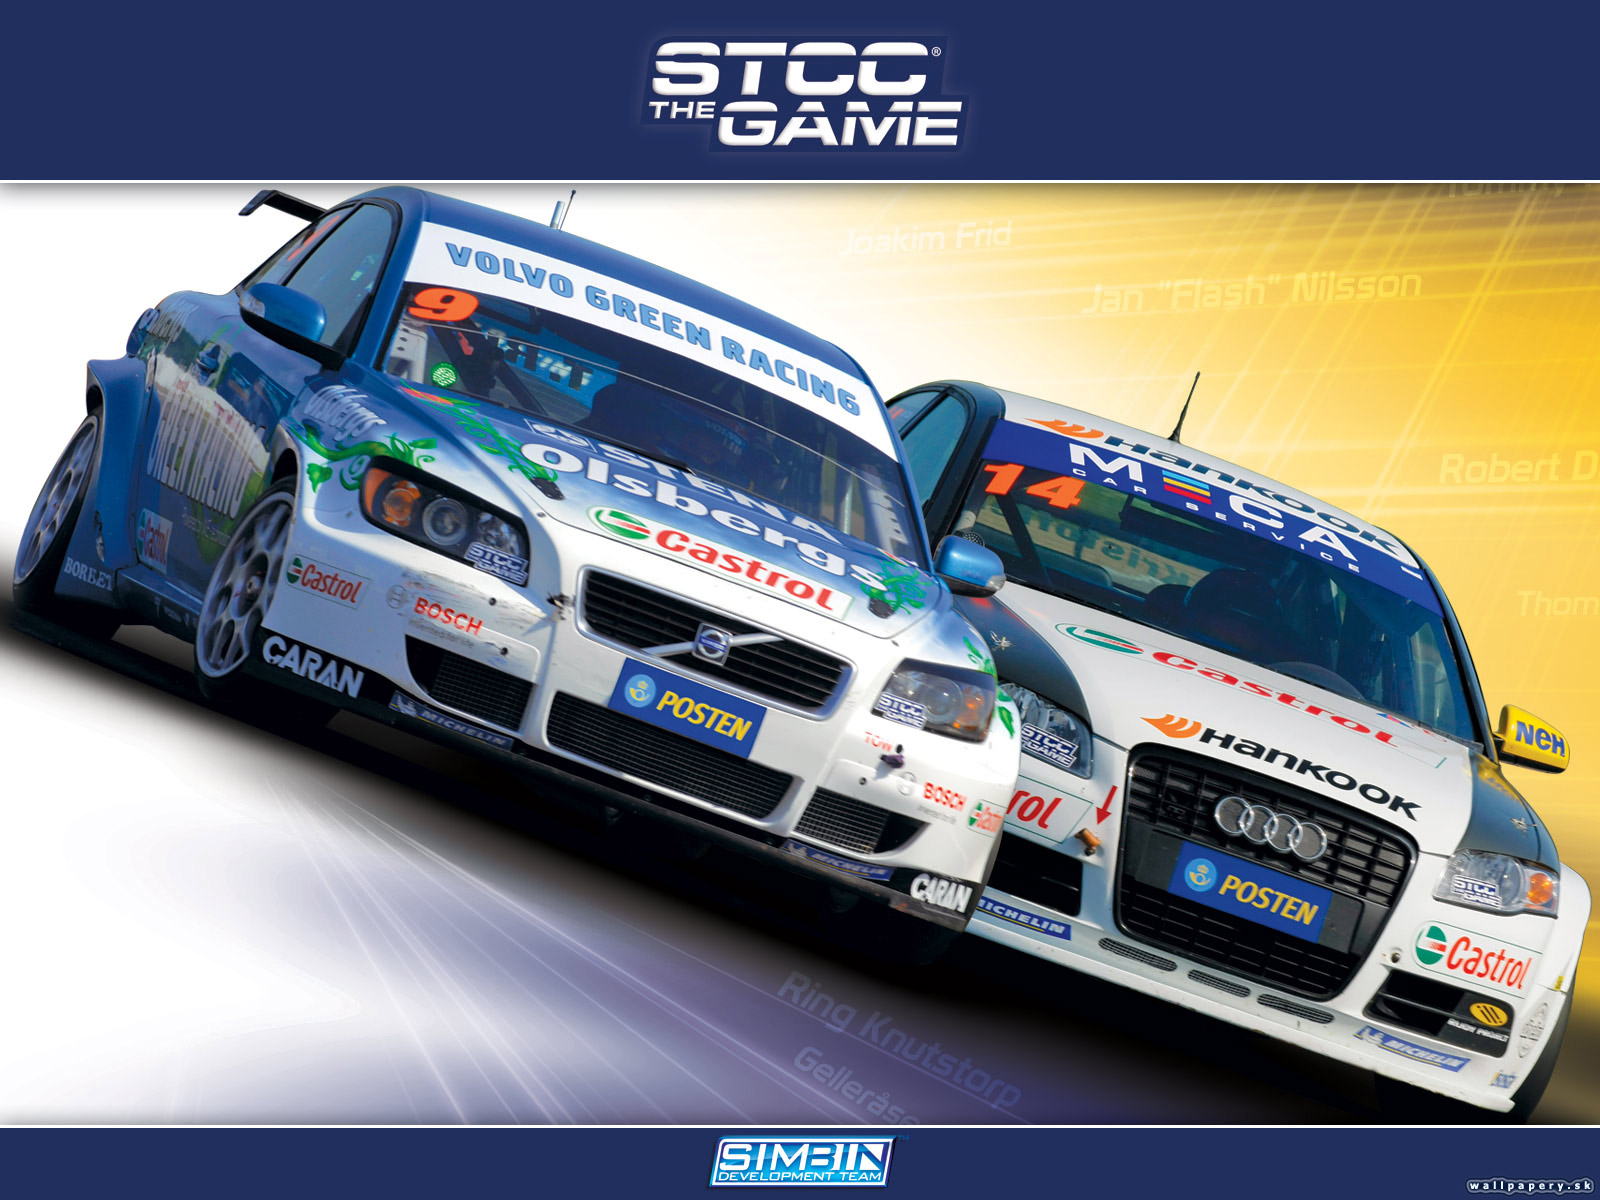 STCC - The Game - wallpaper 1